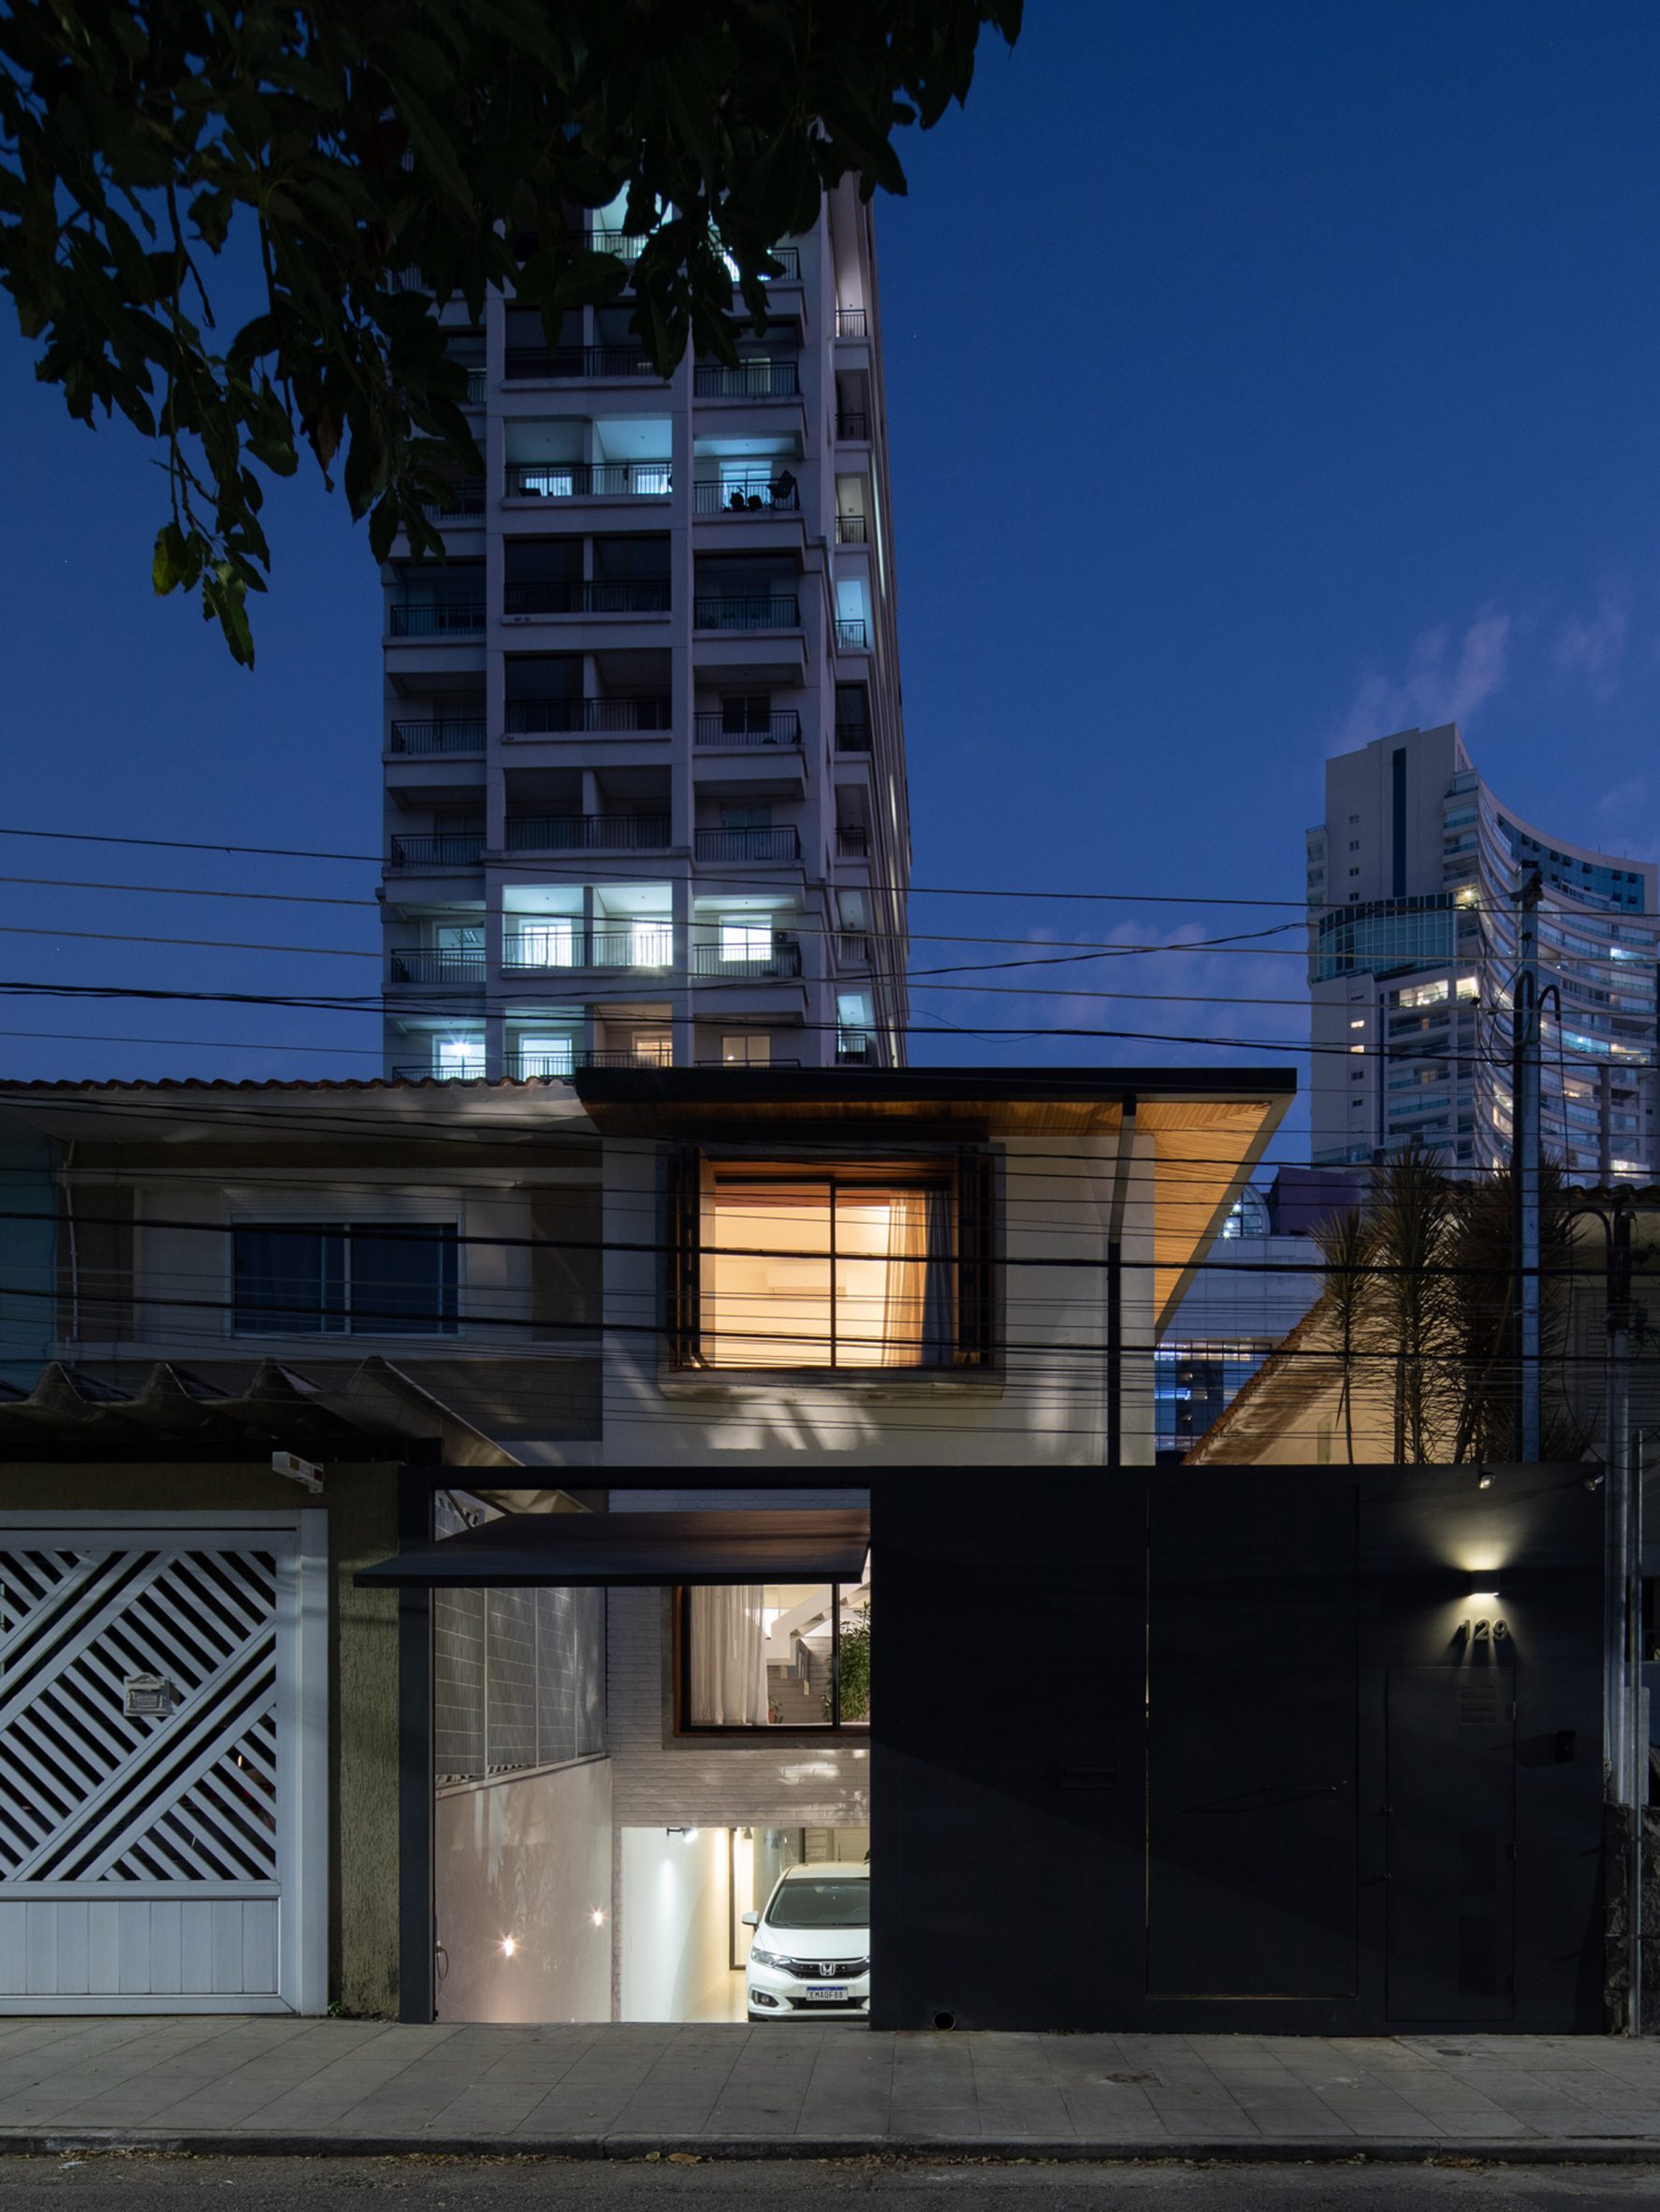 Casa Yuji in Sao Paulo by Goiva with underground car parking